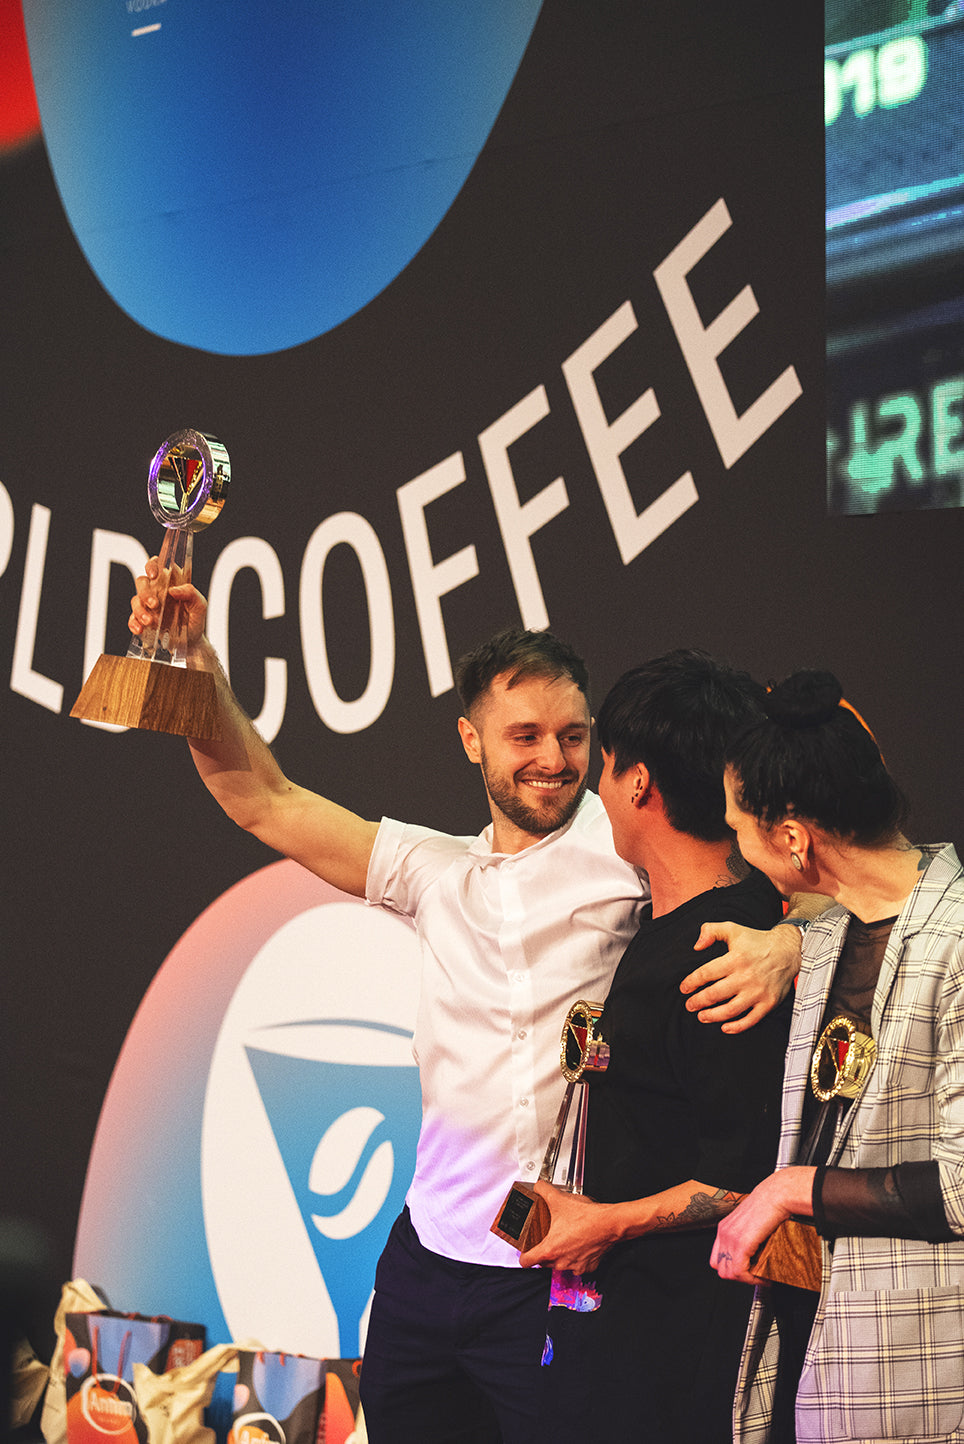 Dan Fellows coffee in good spirits 2019 world coffee events